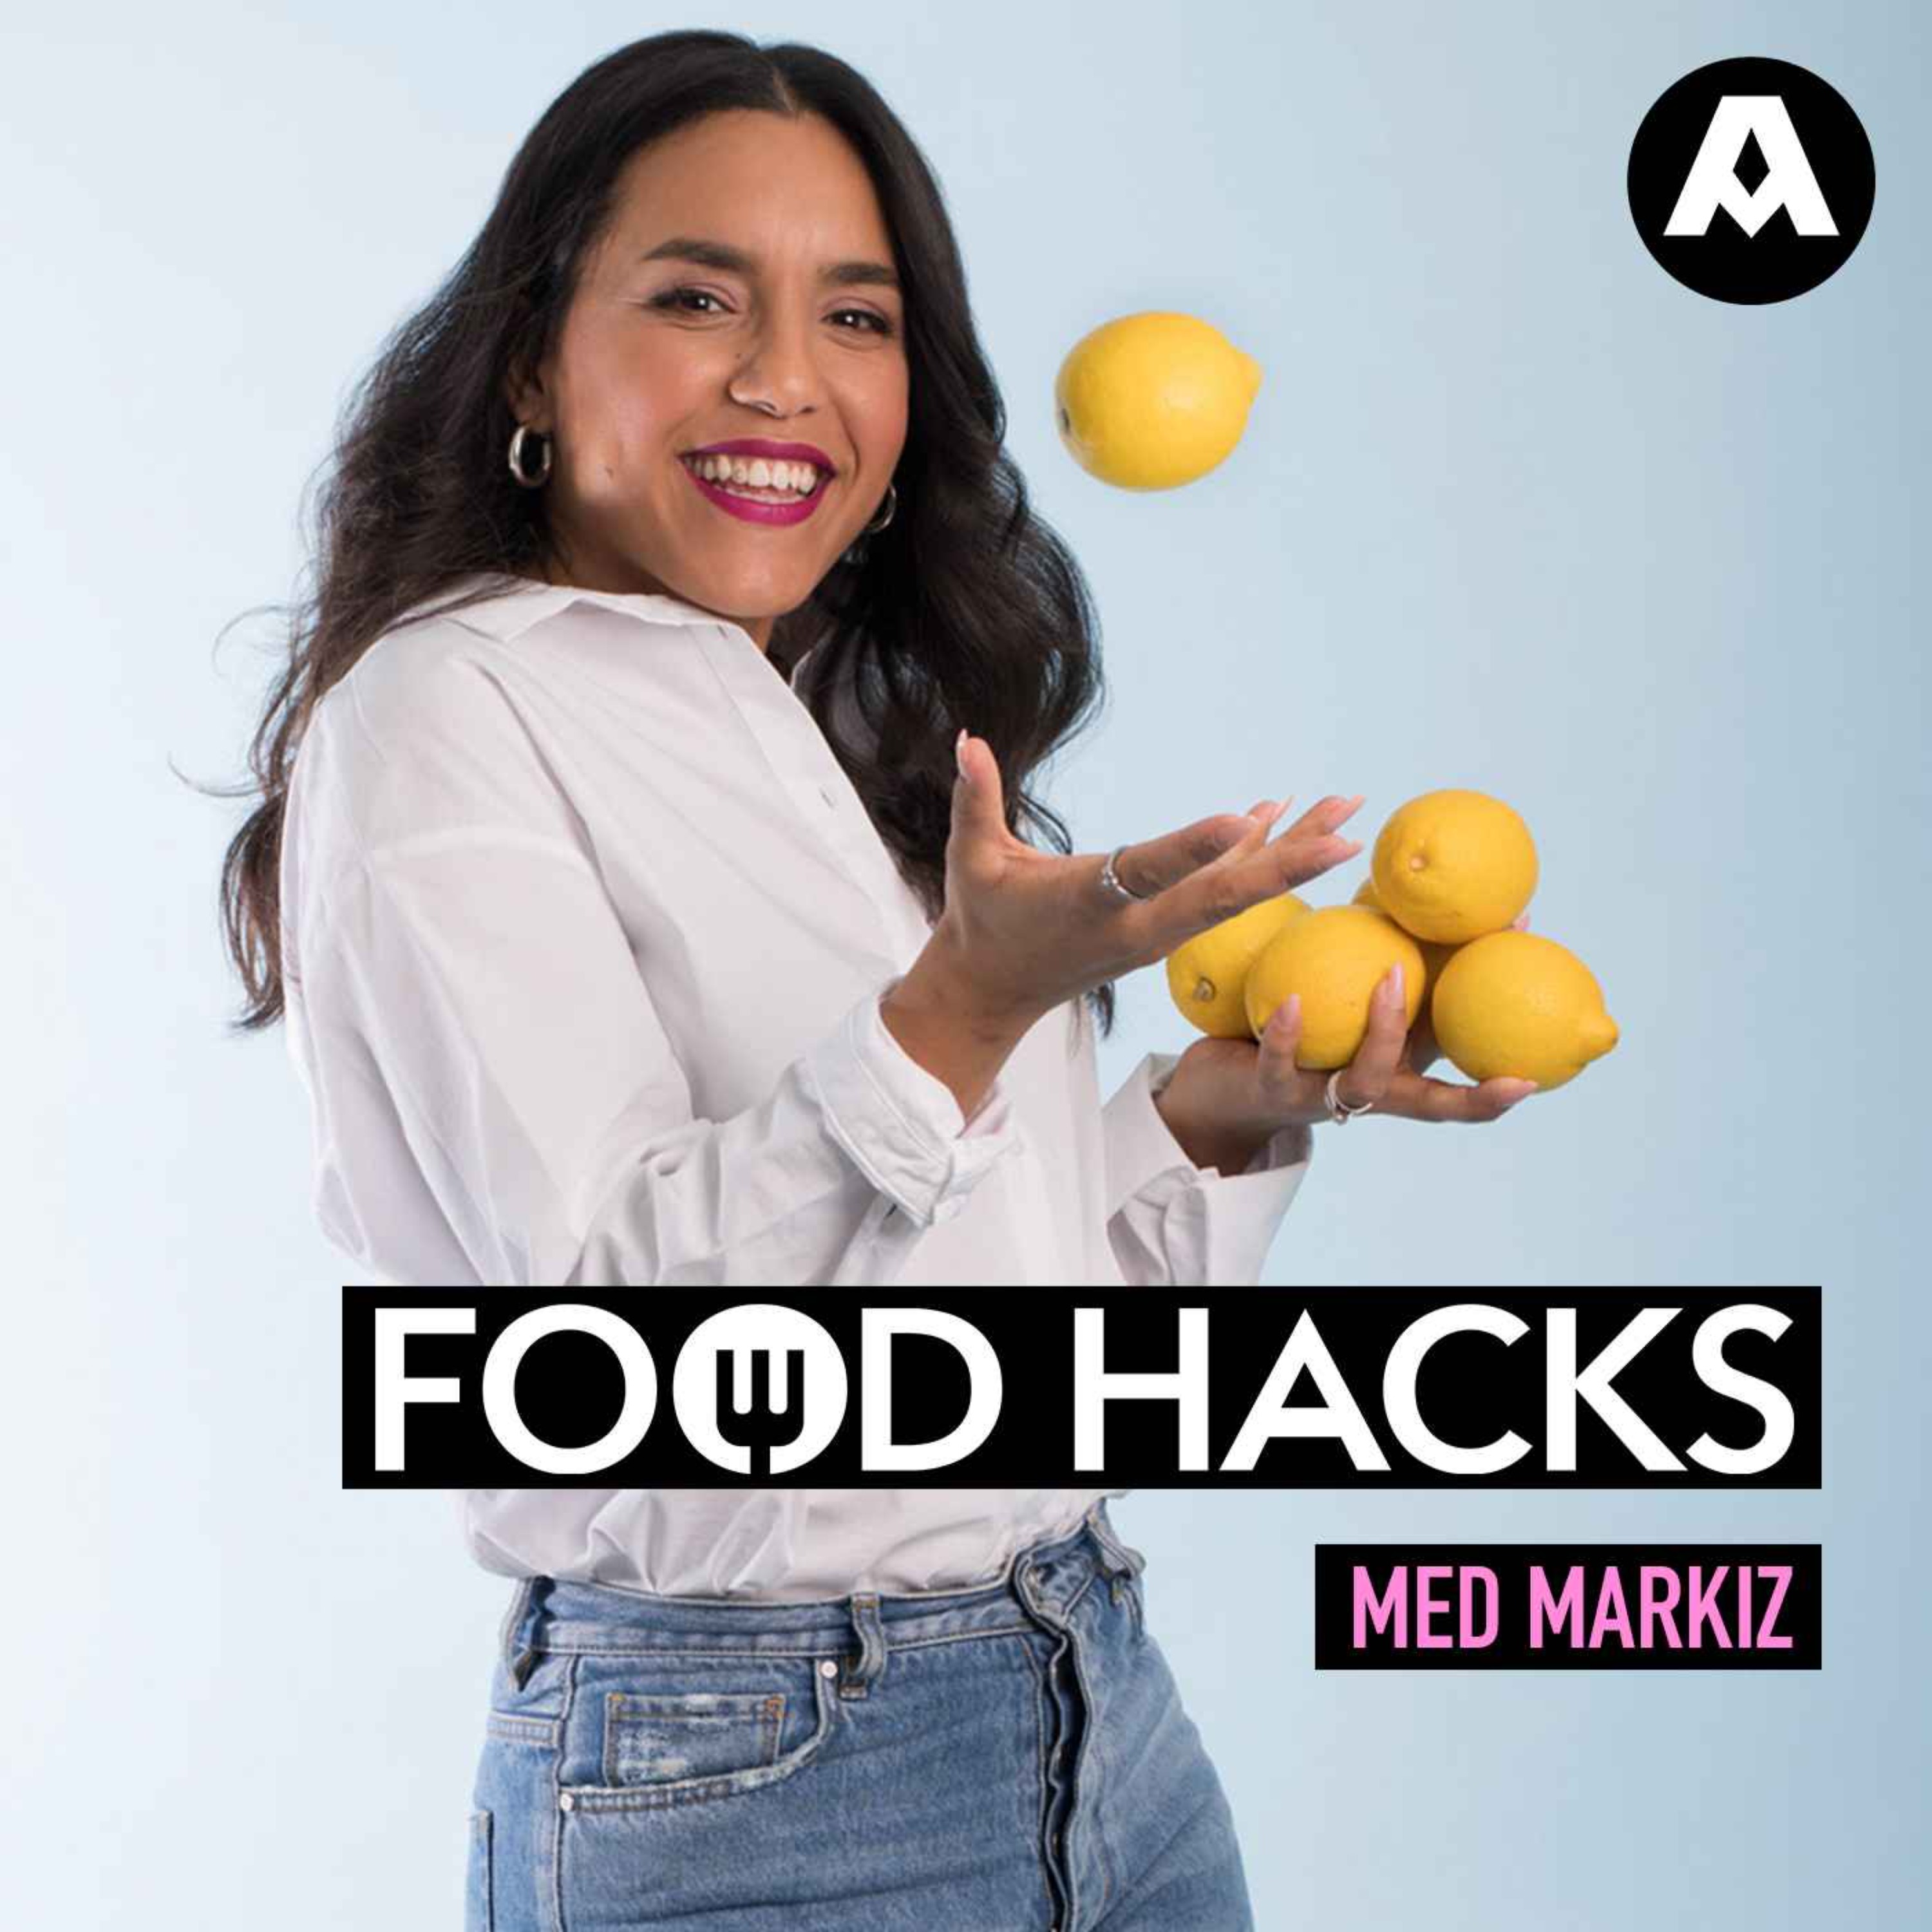 Food hacks: Hel kyckling!